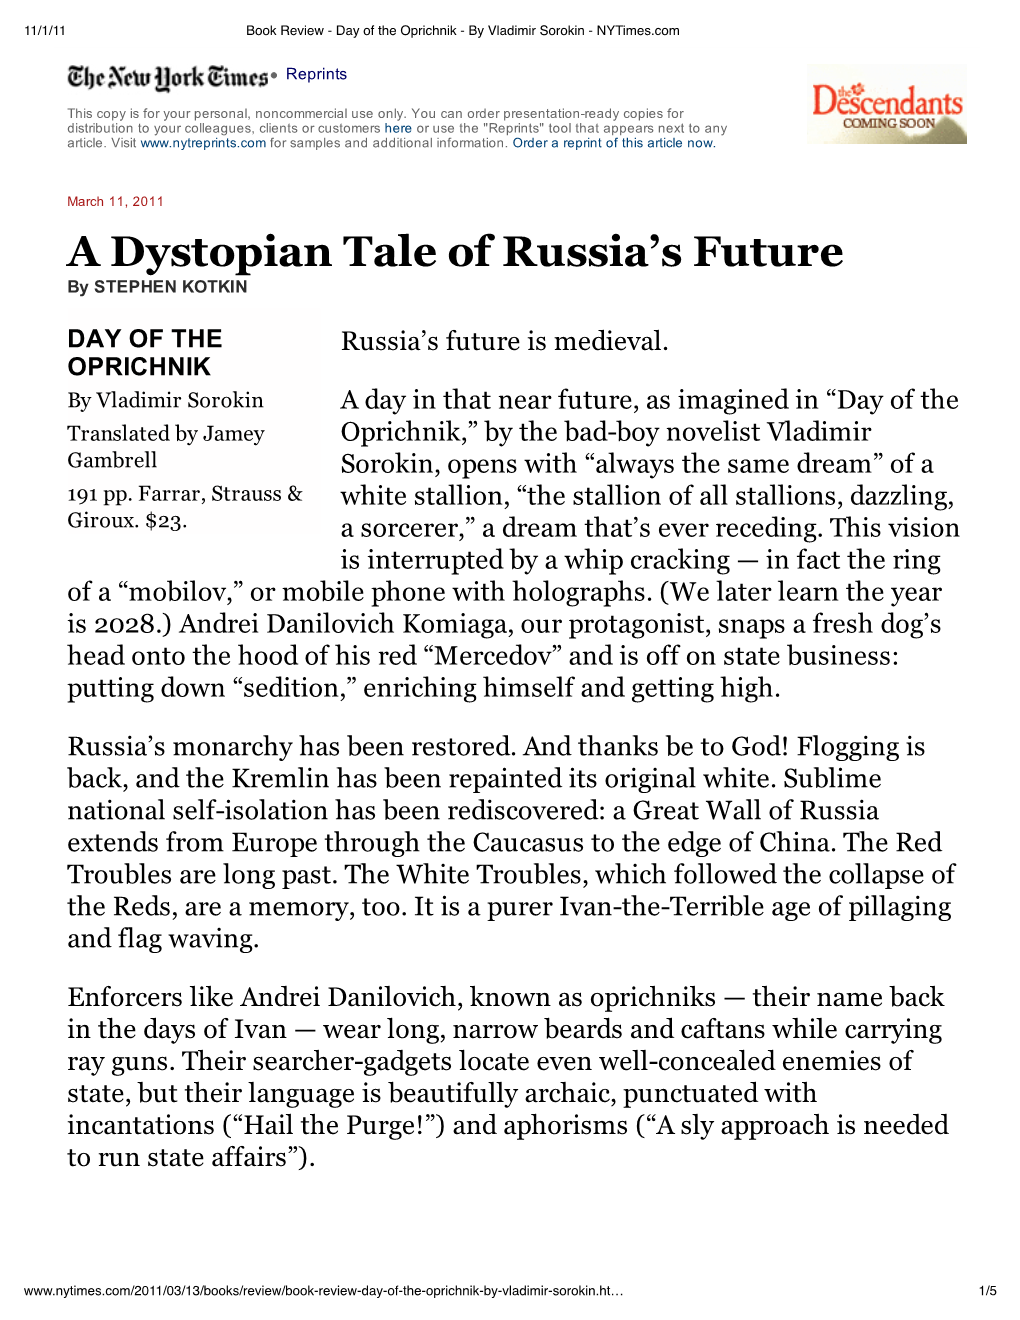 A Dystopian Tale of Russia's Future